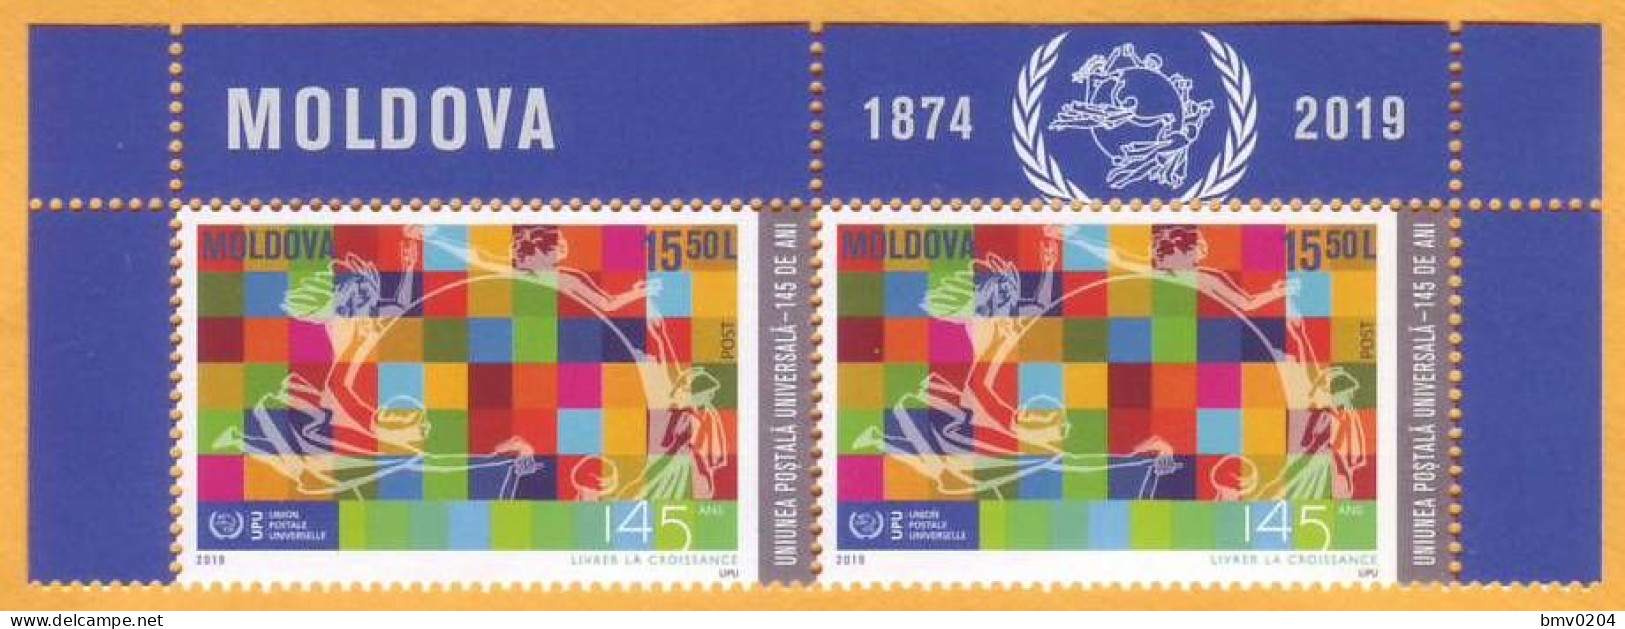 2019 Moldova Moldavie  145 Universal Postal Union. Switzerland. Berne. Monument  2v  Mint. - Moldawien (Moldau)